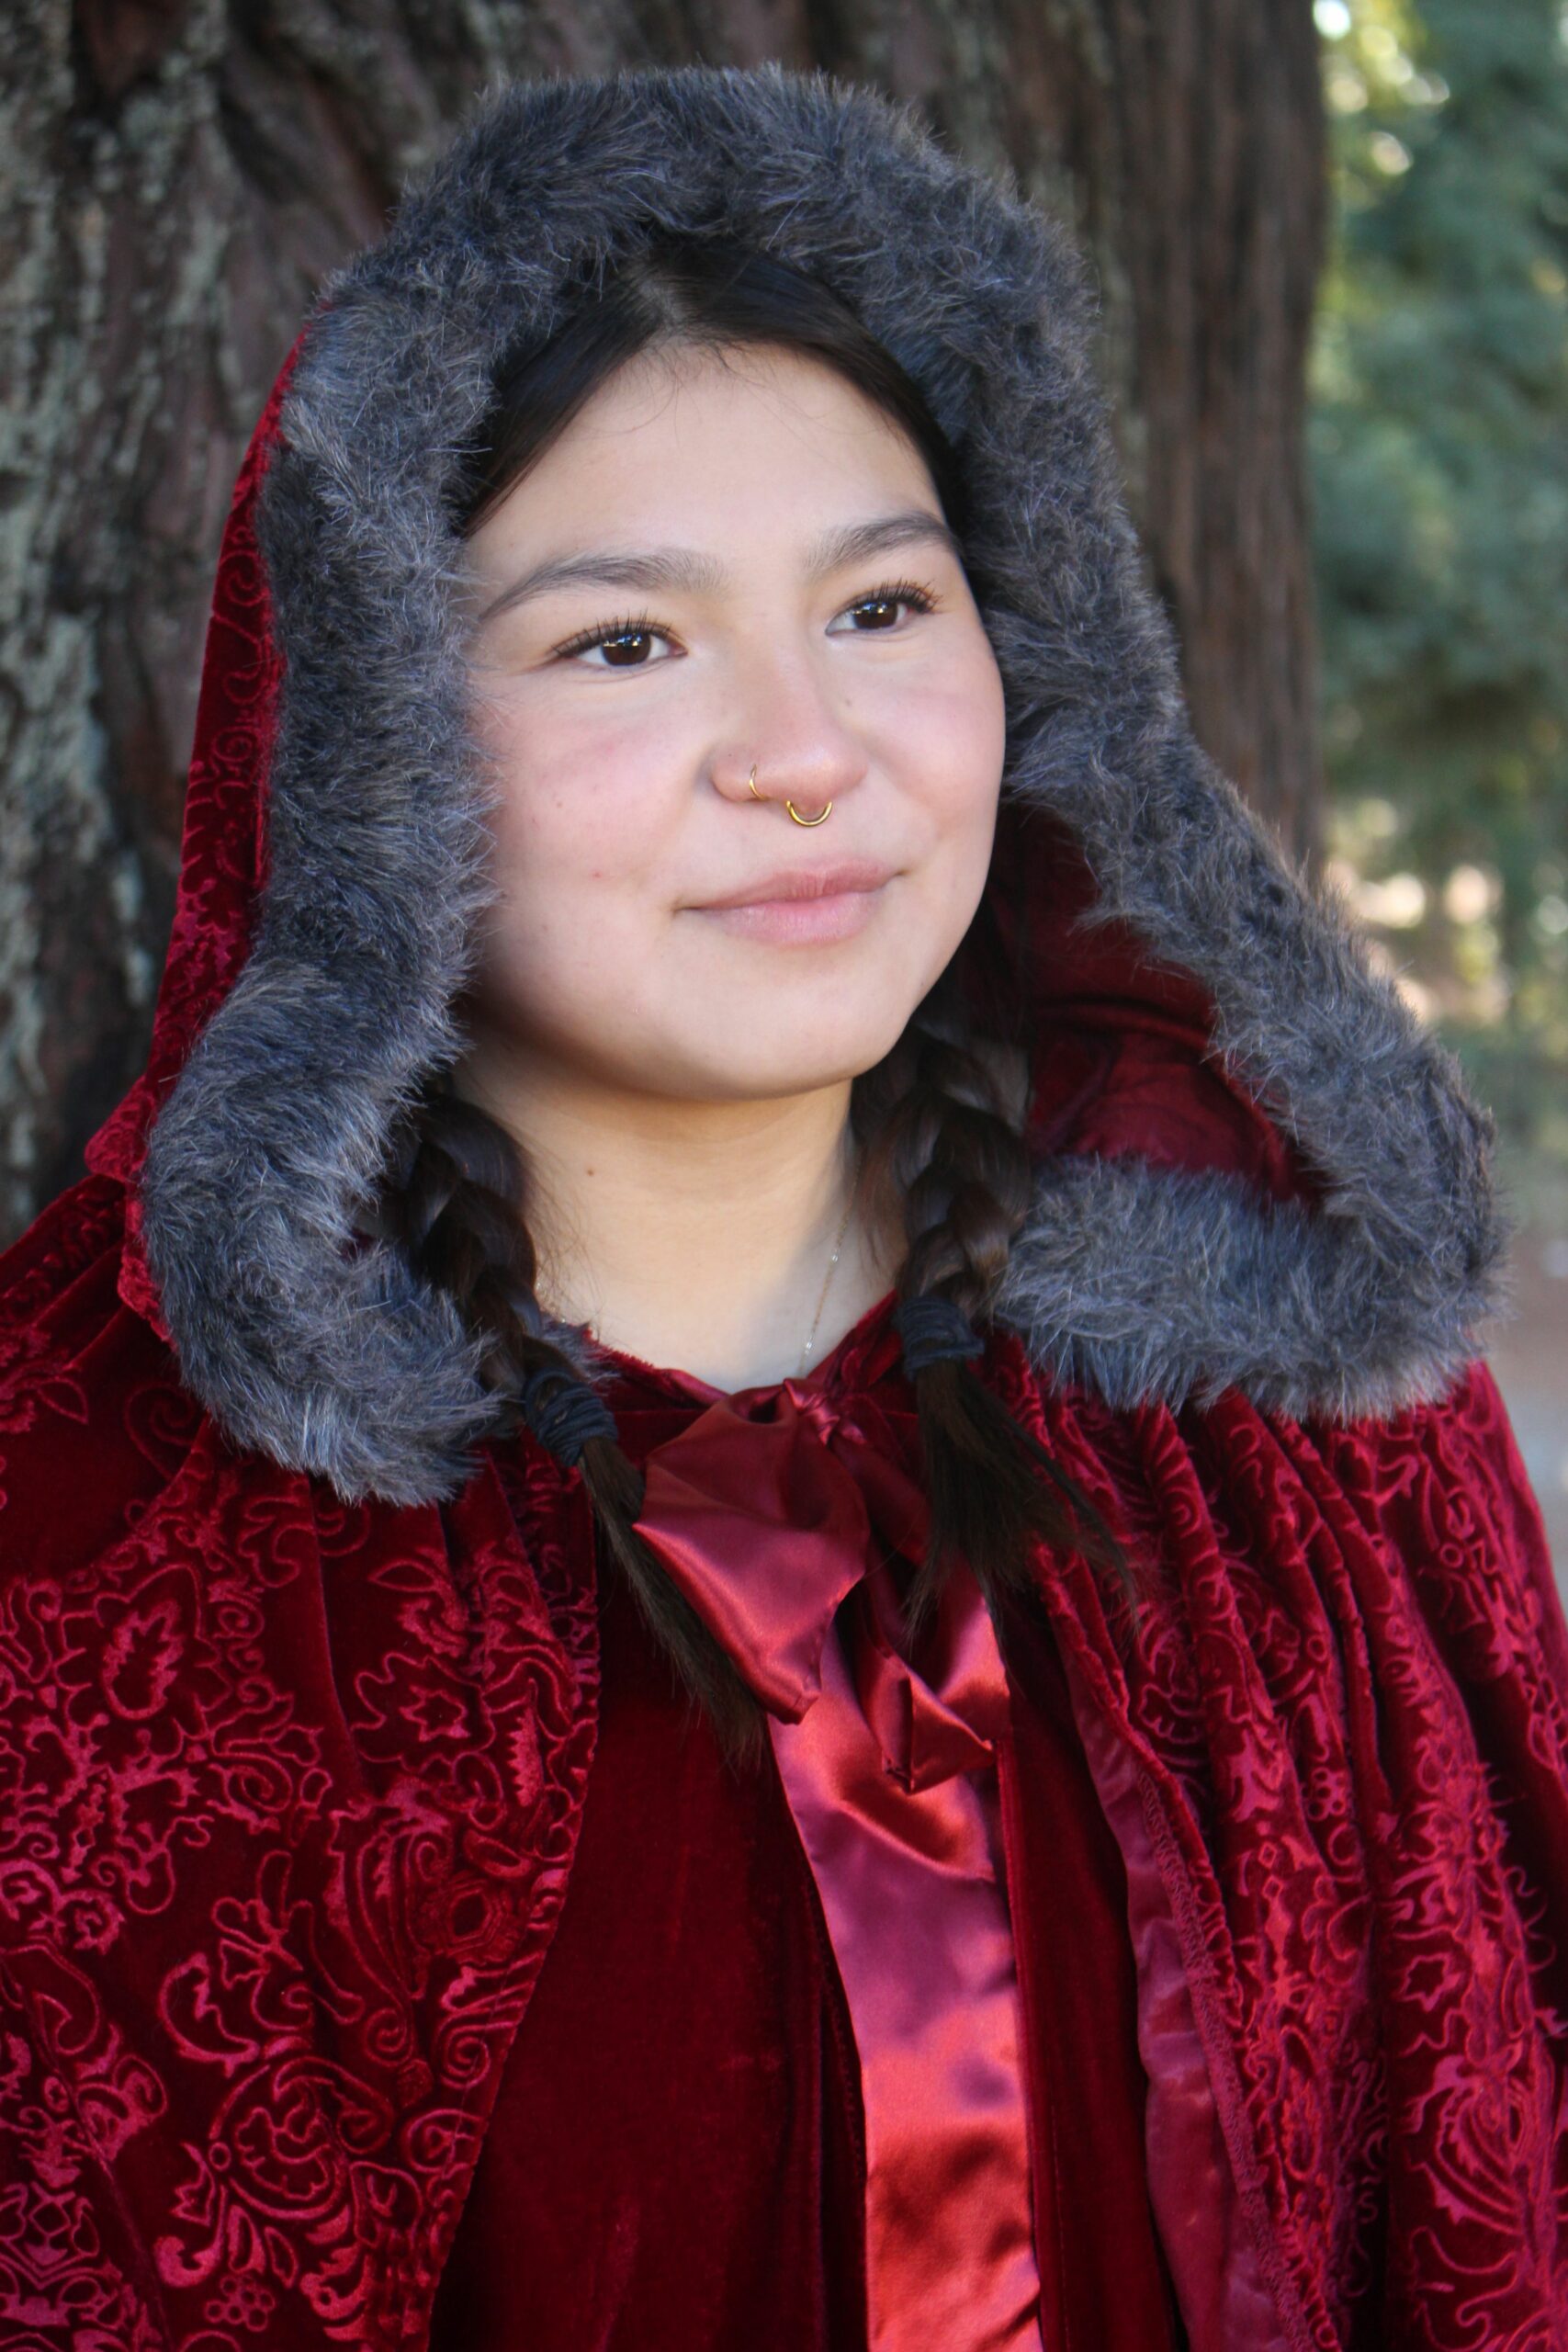 Bella Sol Padilla as "Little Red." Photo courtesy Mount Madonna School